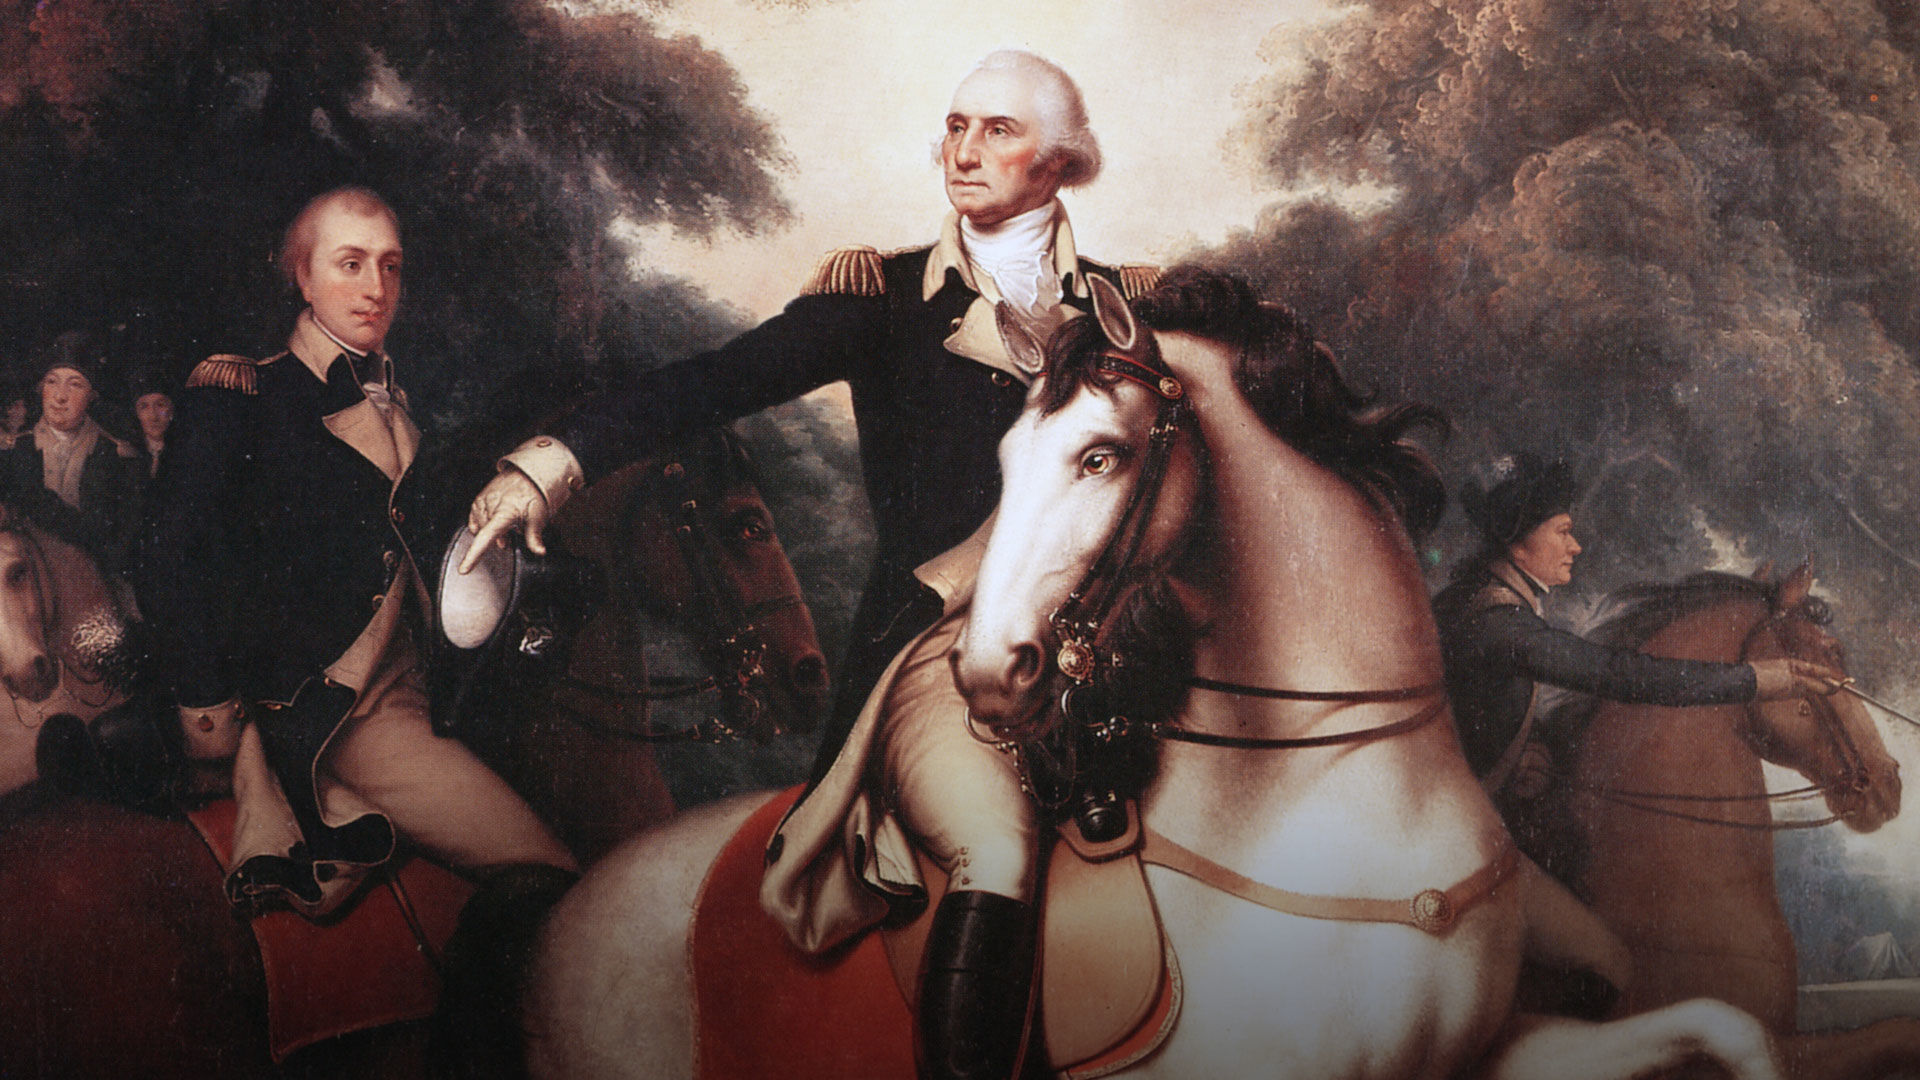 Read More: 11 People Who Shaped Washington's Life